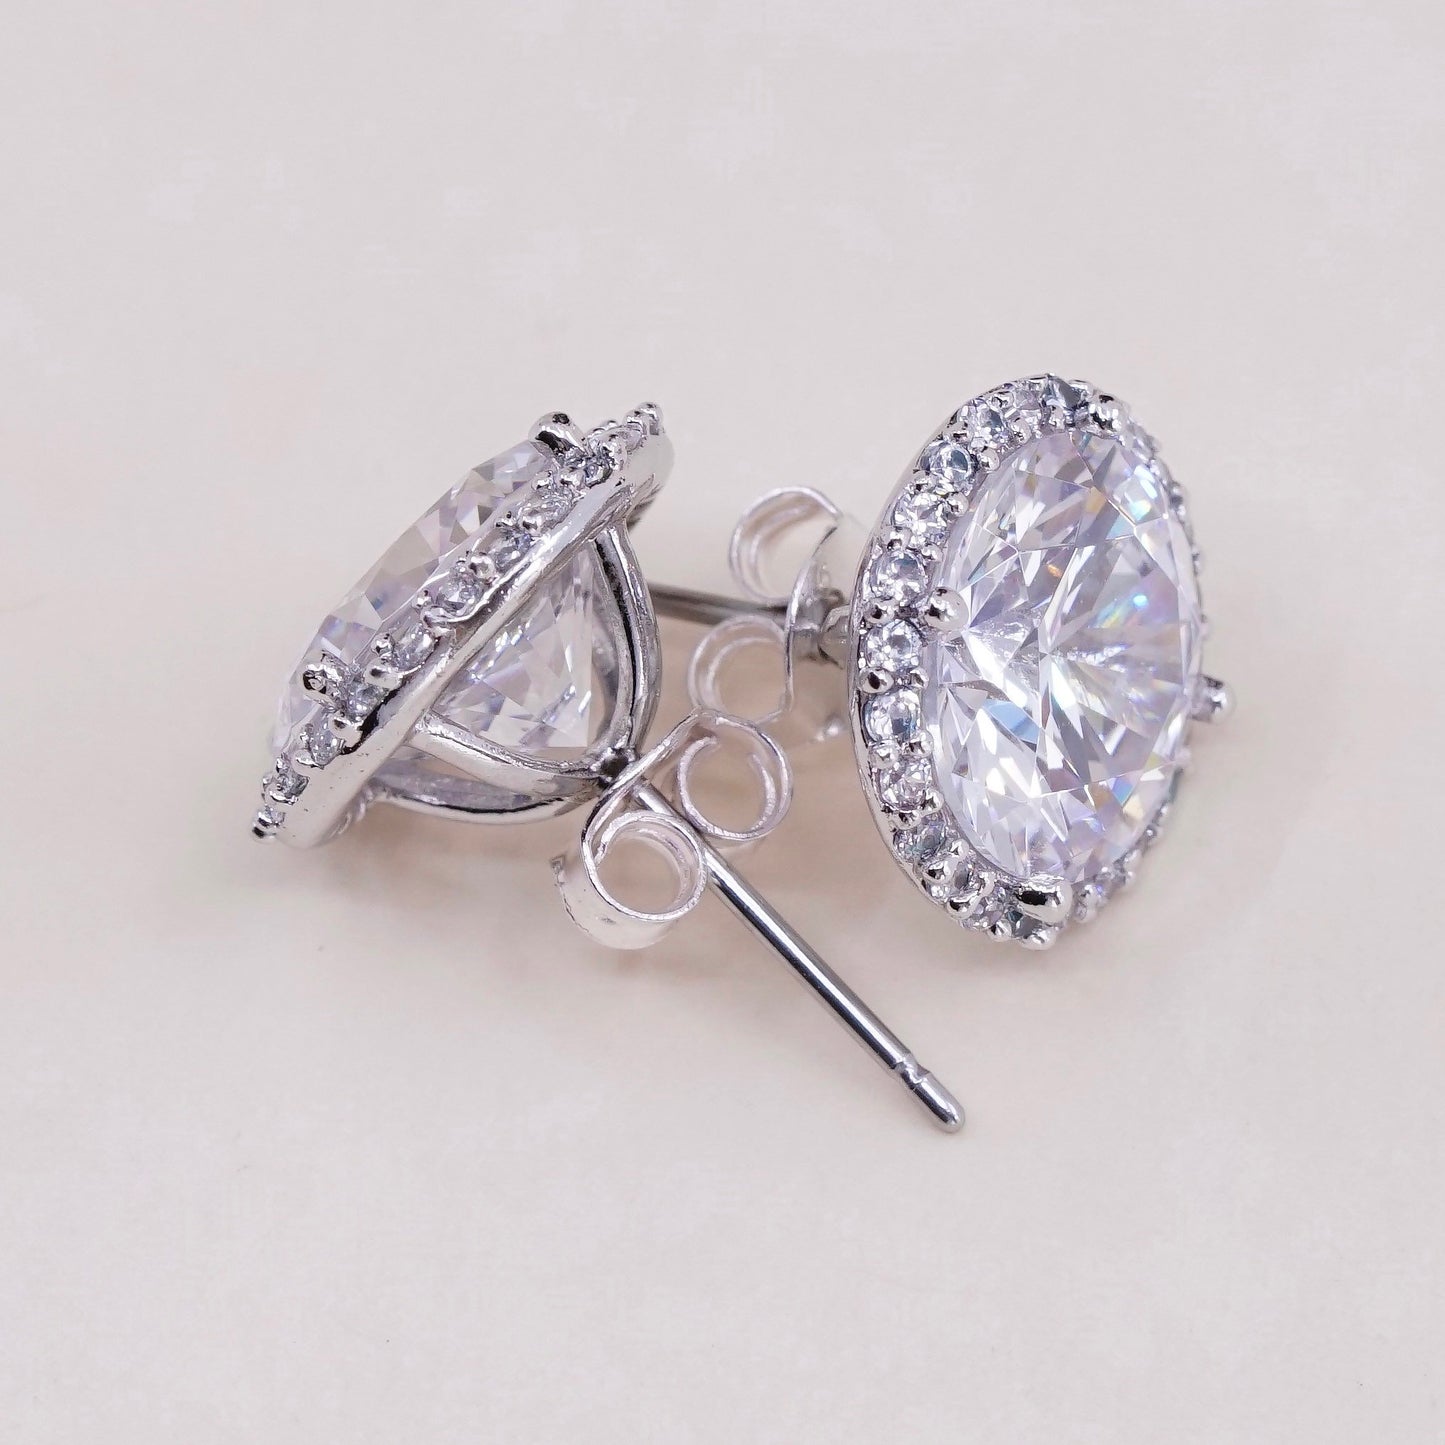 Vintage sterling silver cz studs, fashion minimalist earrings